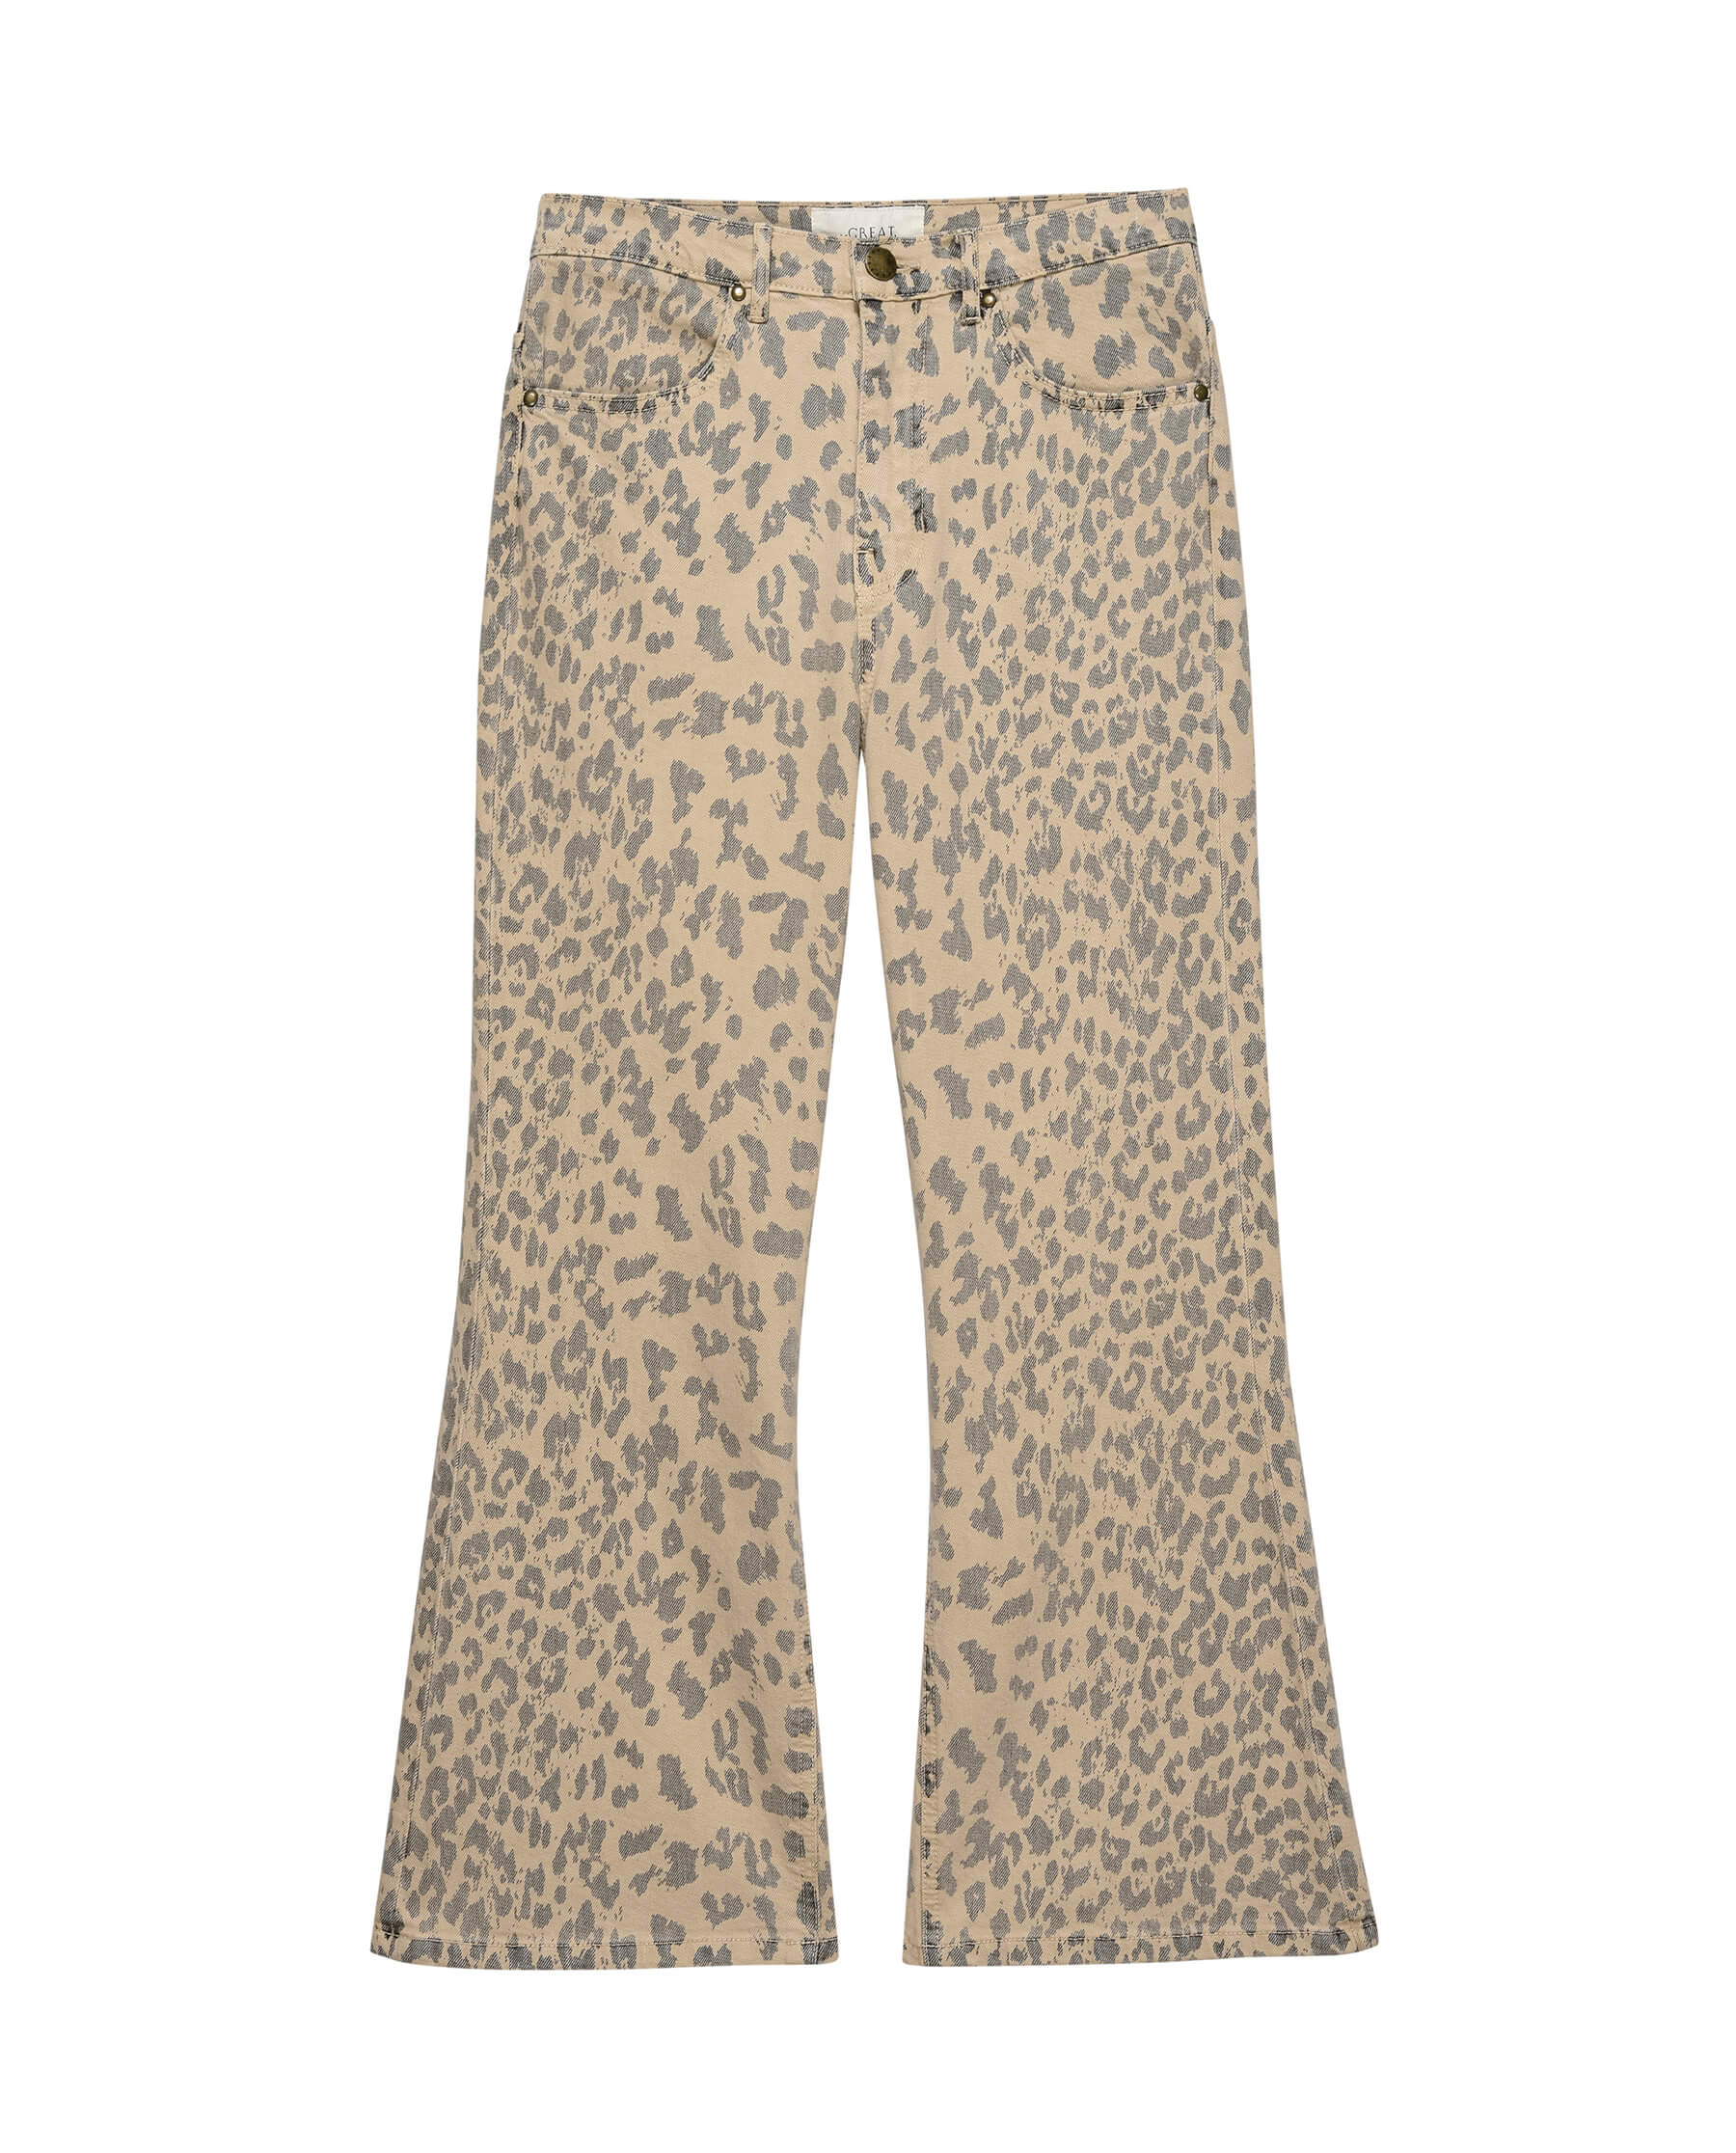 The Kick Bell Jean. -- Vintage Leopard